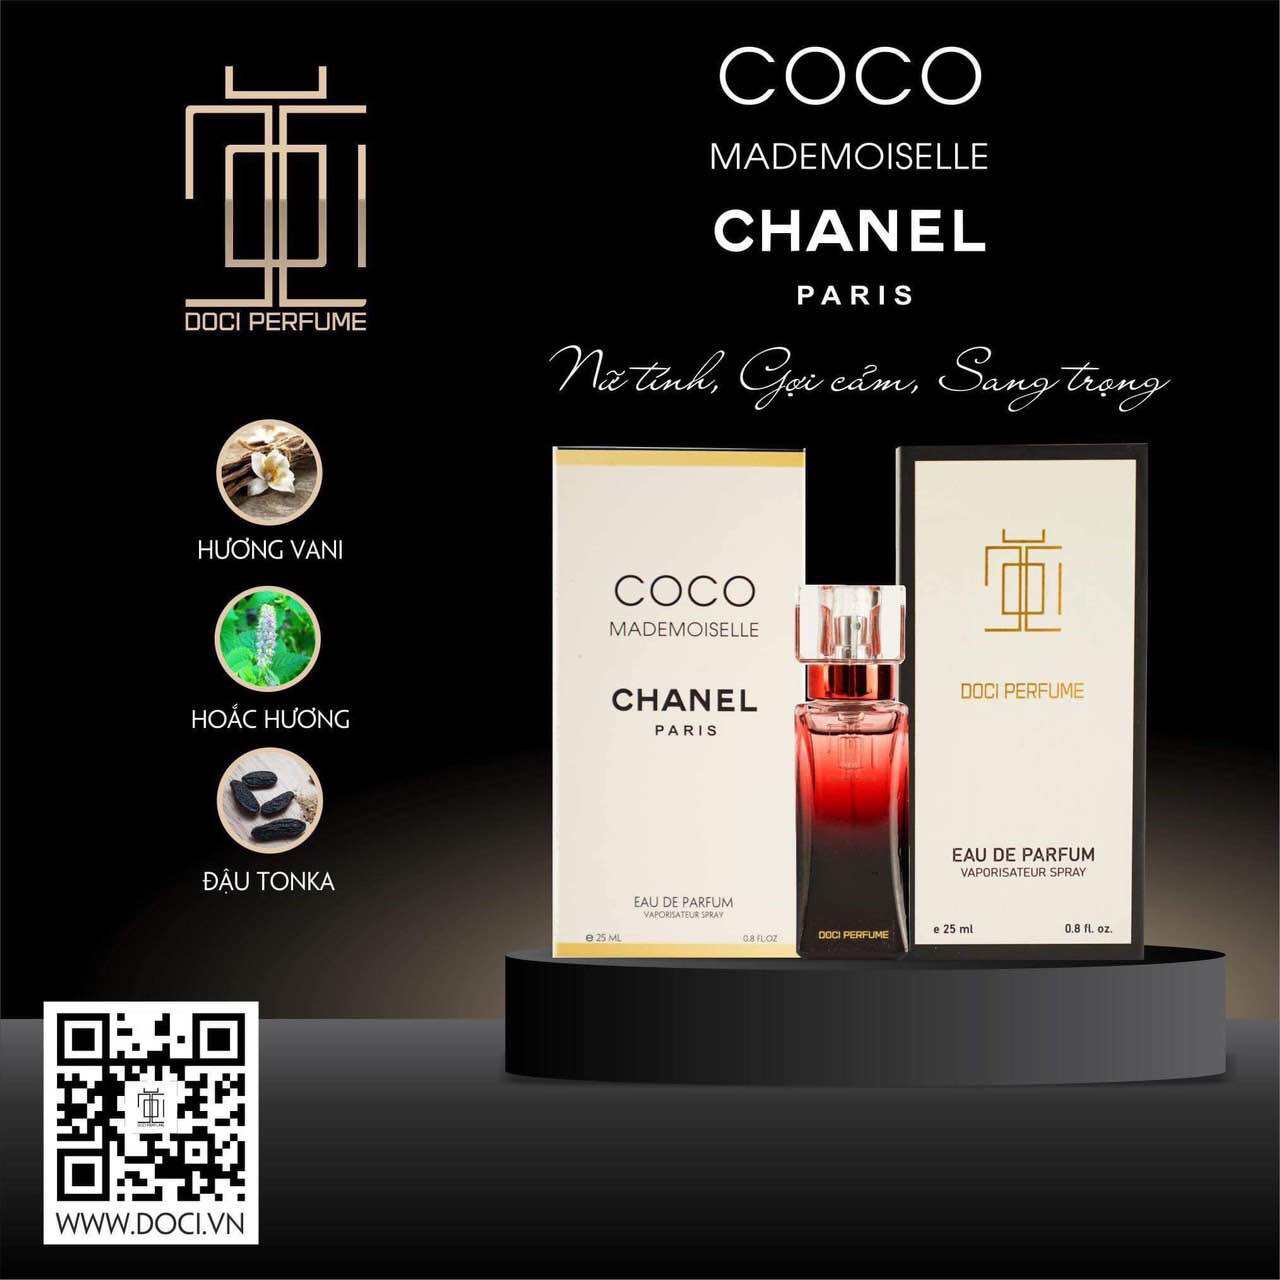 Chanel COCO Mademoiselle EDP 100ml Perfume with Gift Box  Amazoncouk  Beauty